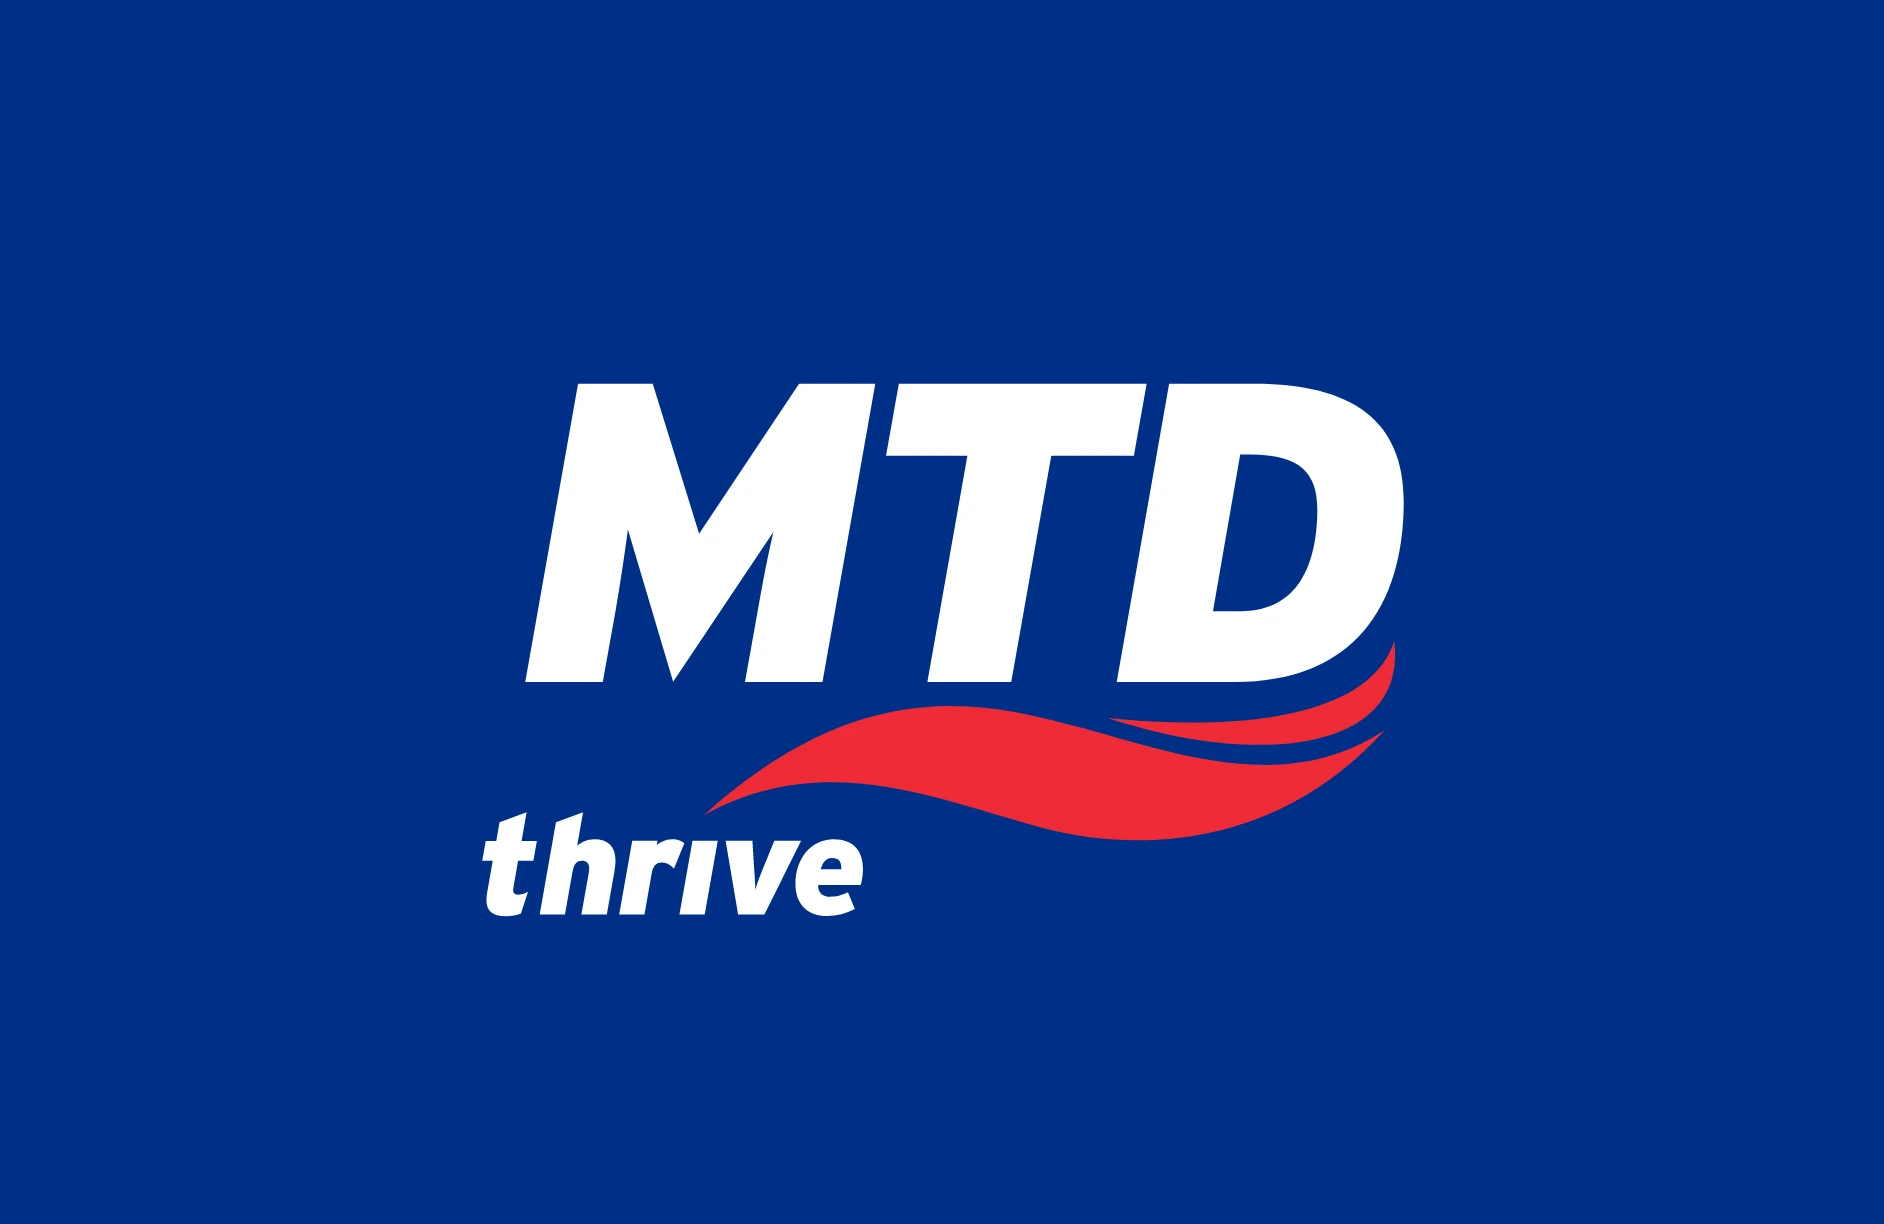 Mtd thrive logo on a blue background.